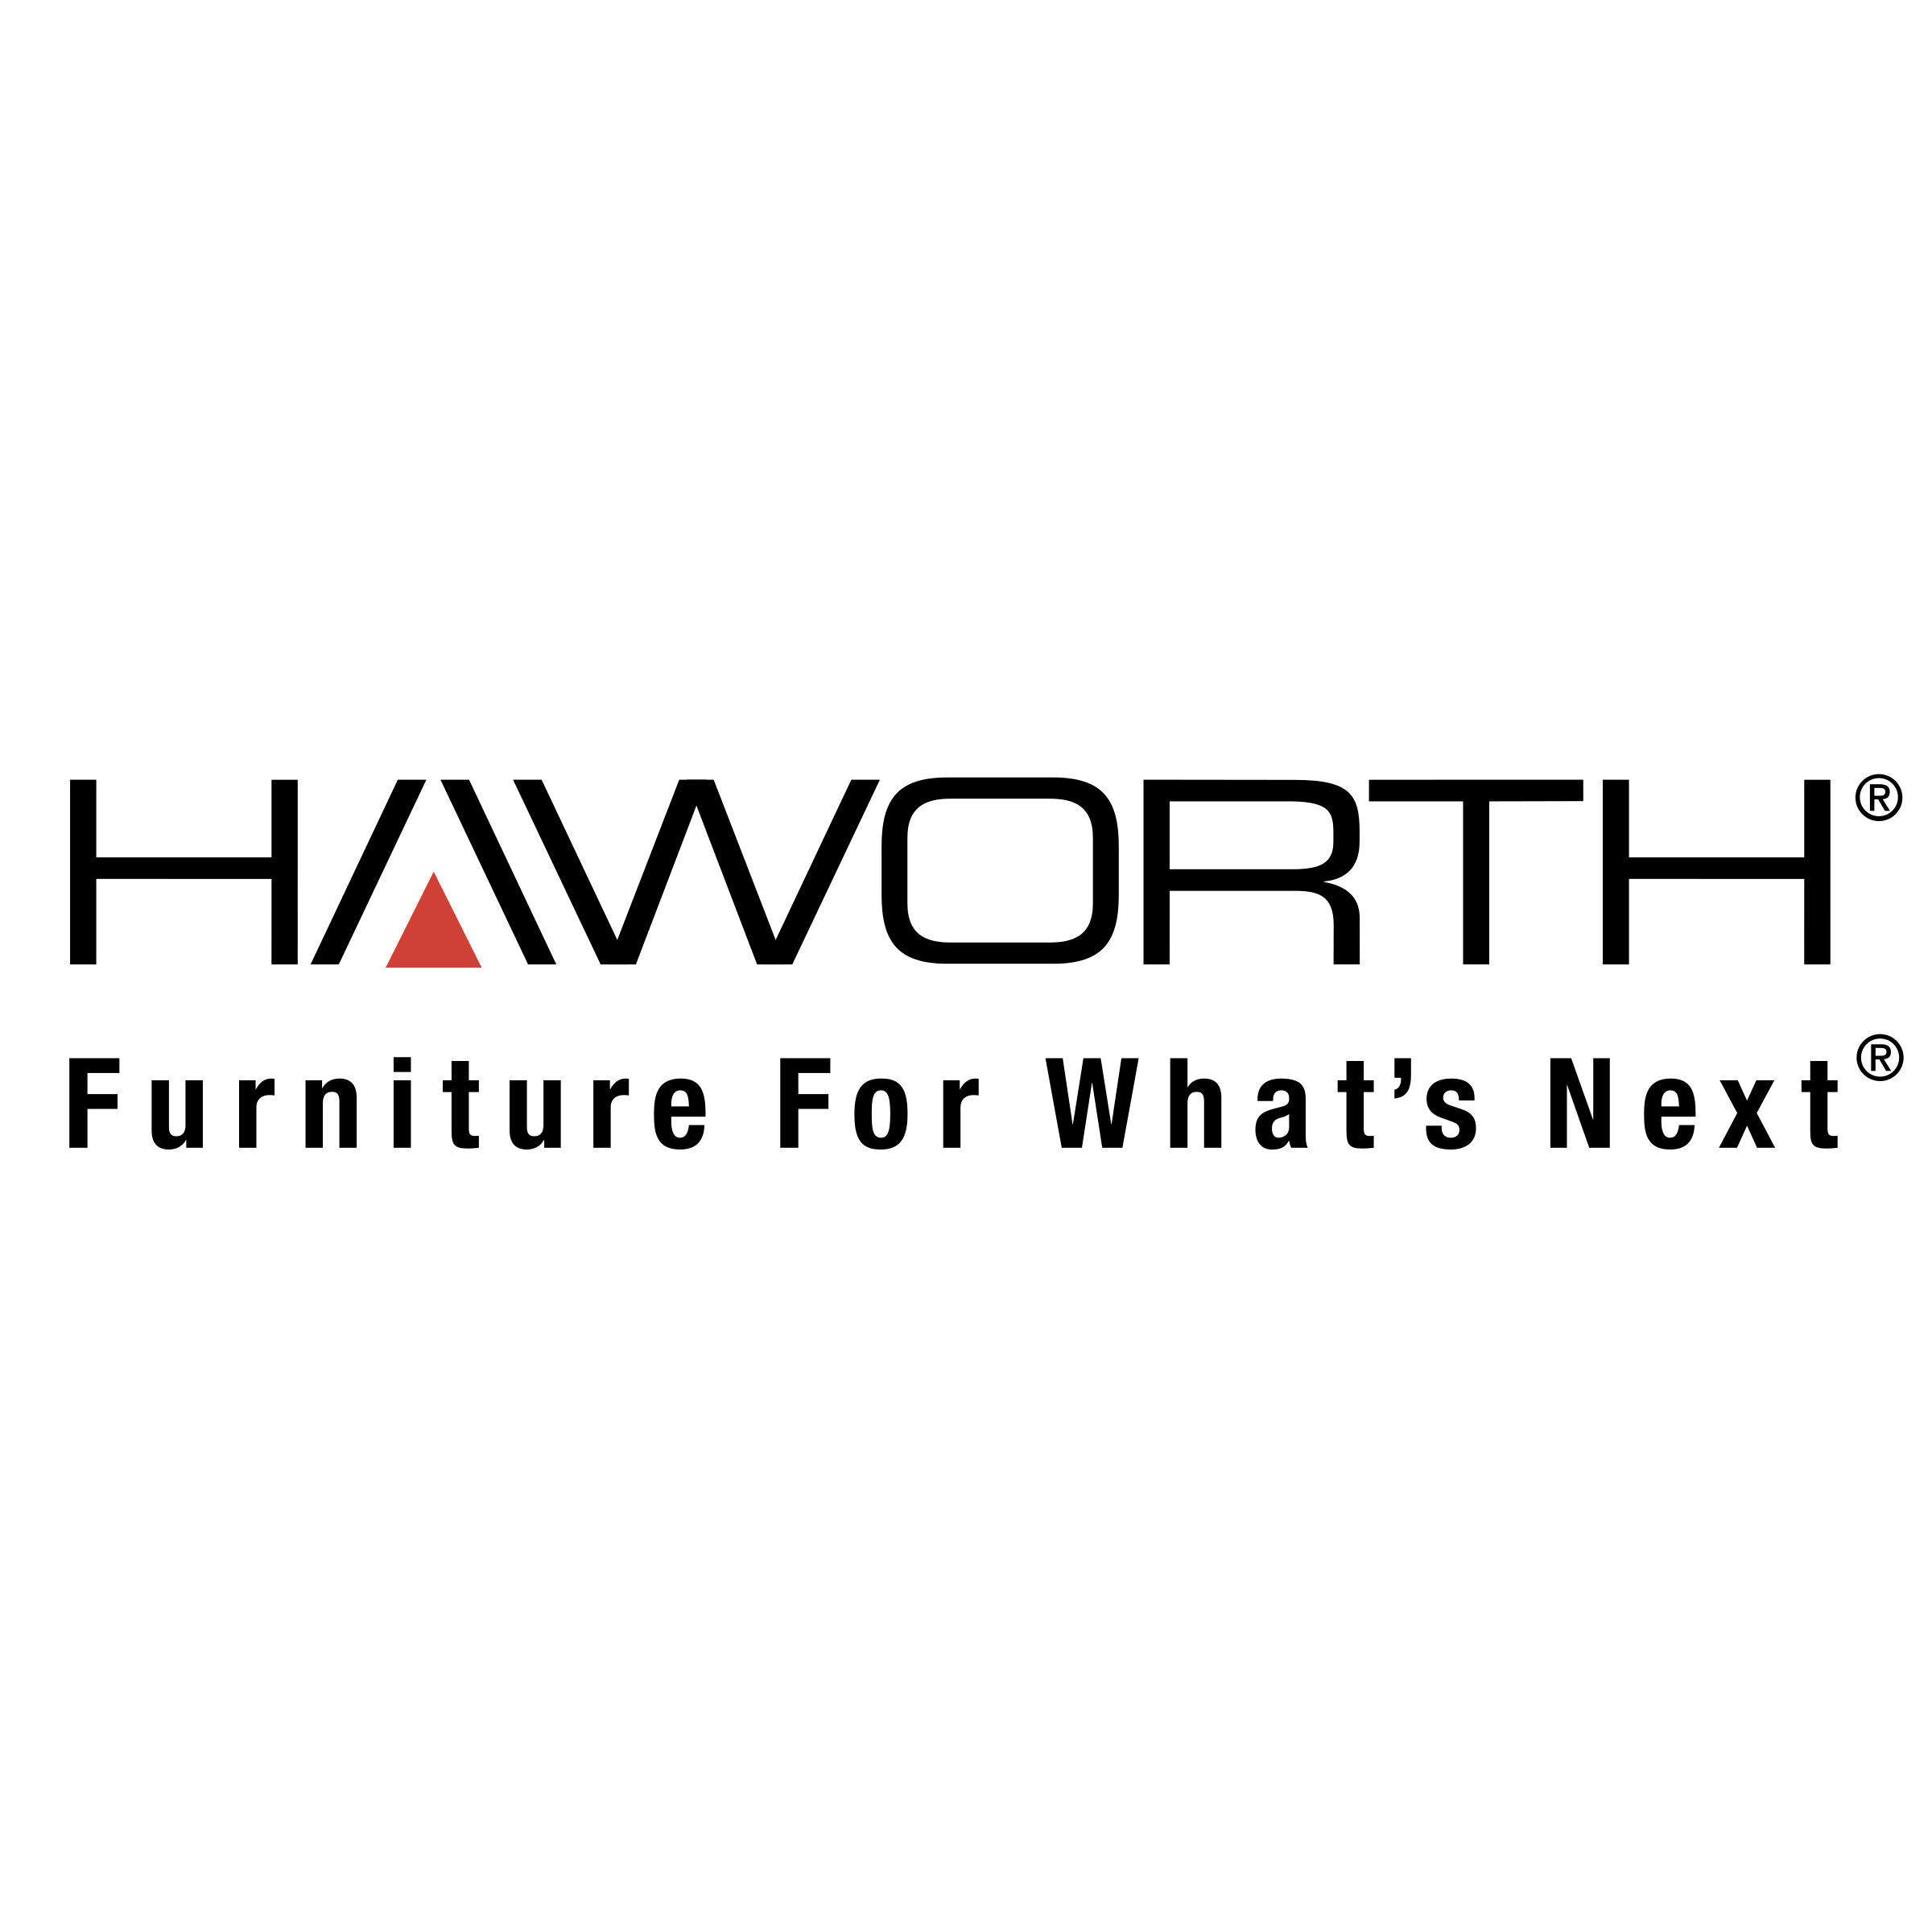 Haworth Logo - Haworth Logo PNG Transparent & SVG Vector - Freebie Supply